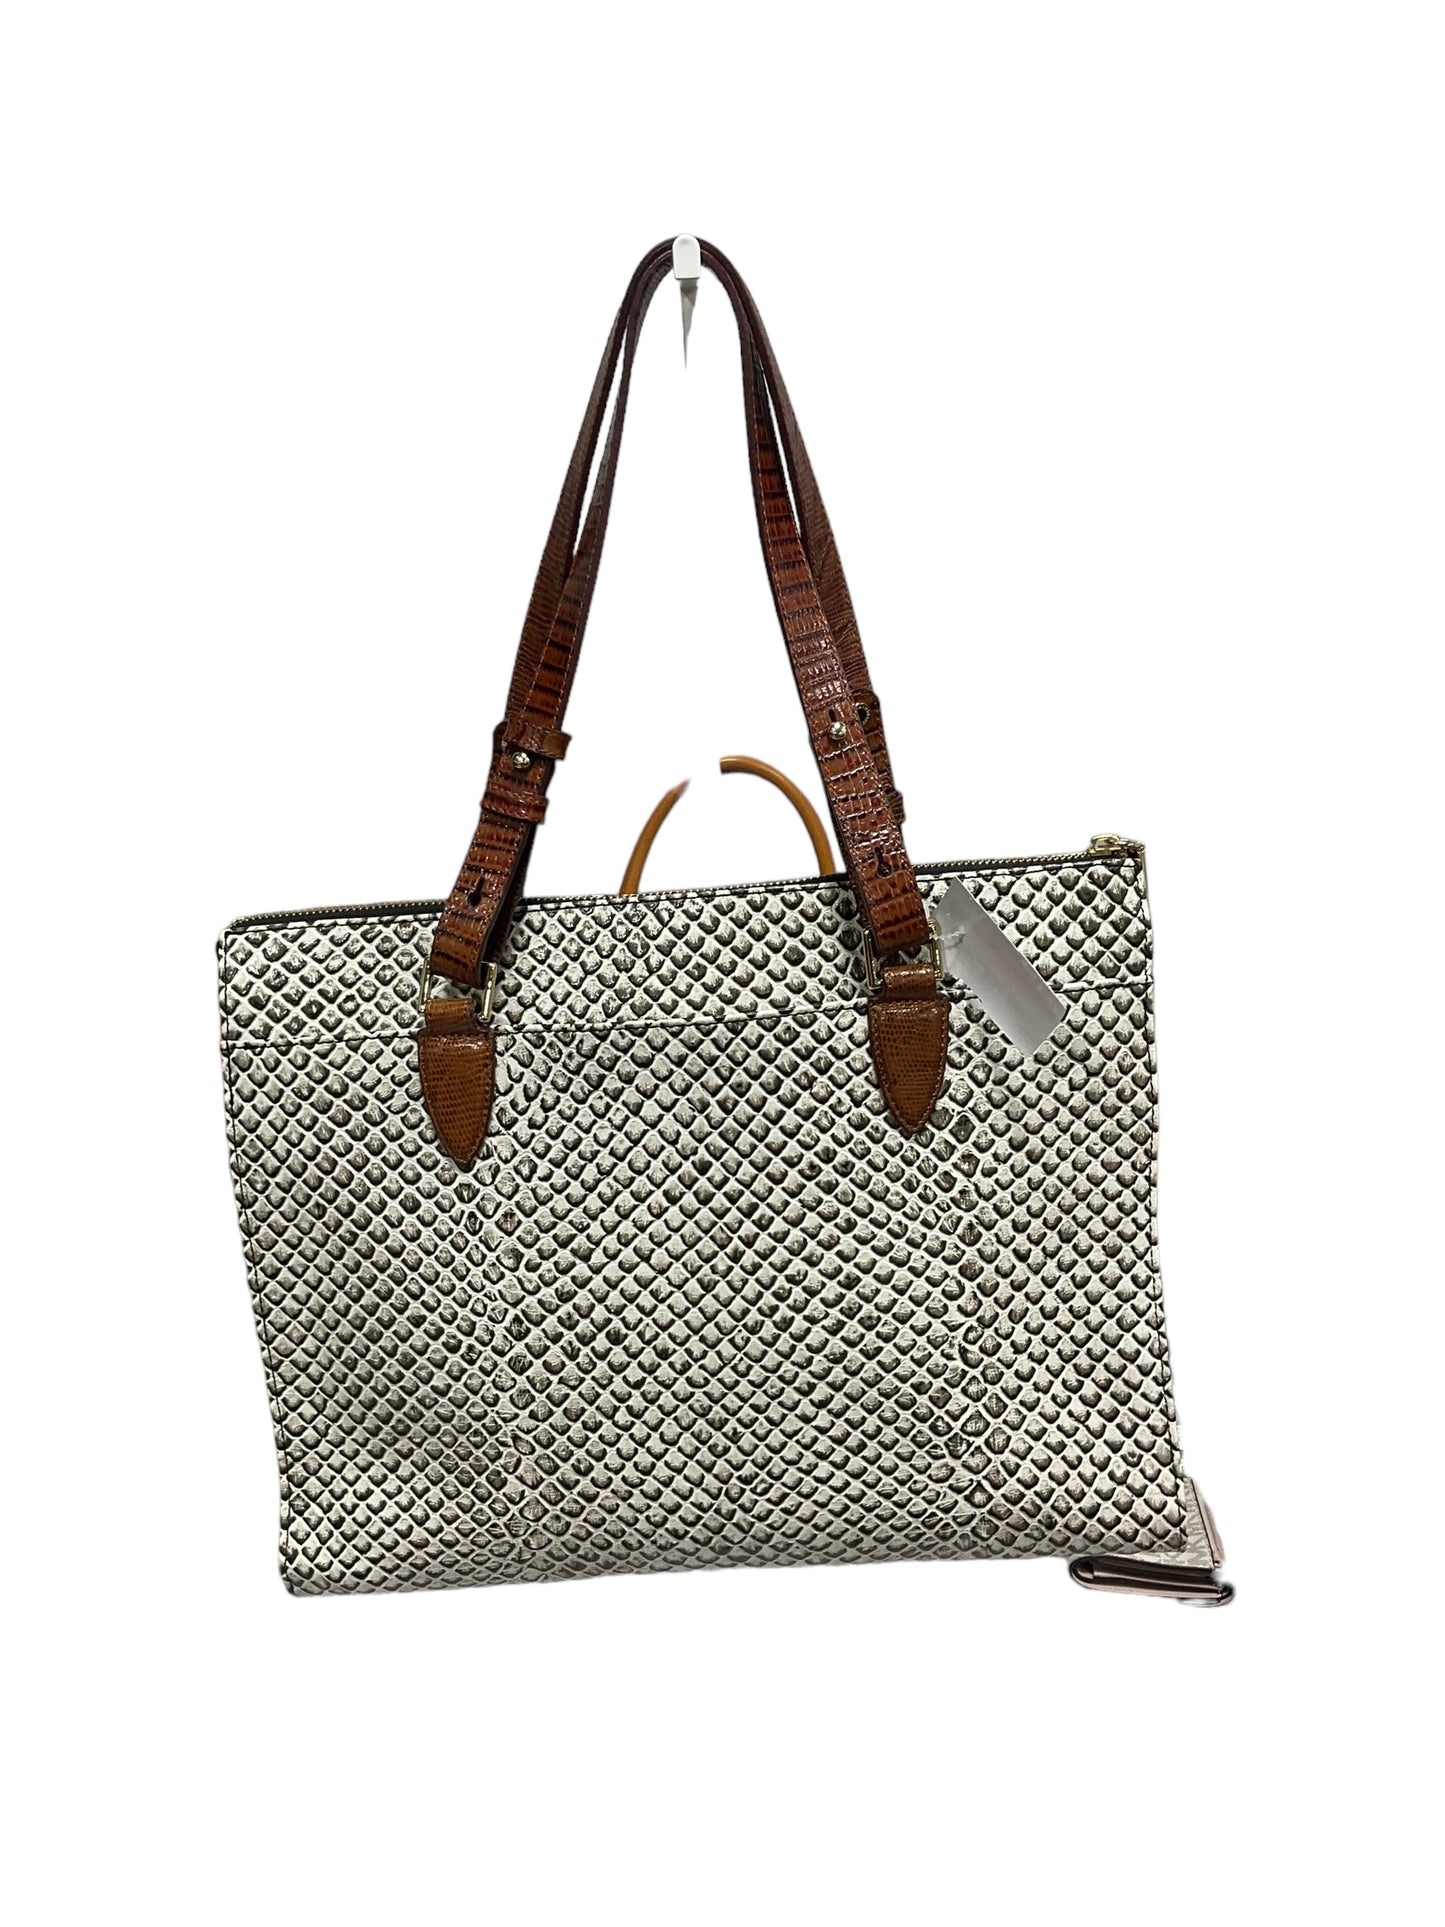 Handbag Leather By Brahmin  Size: Large